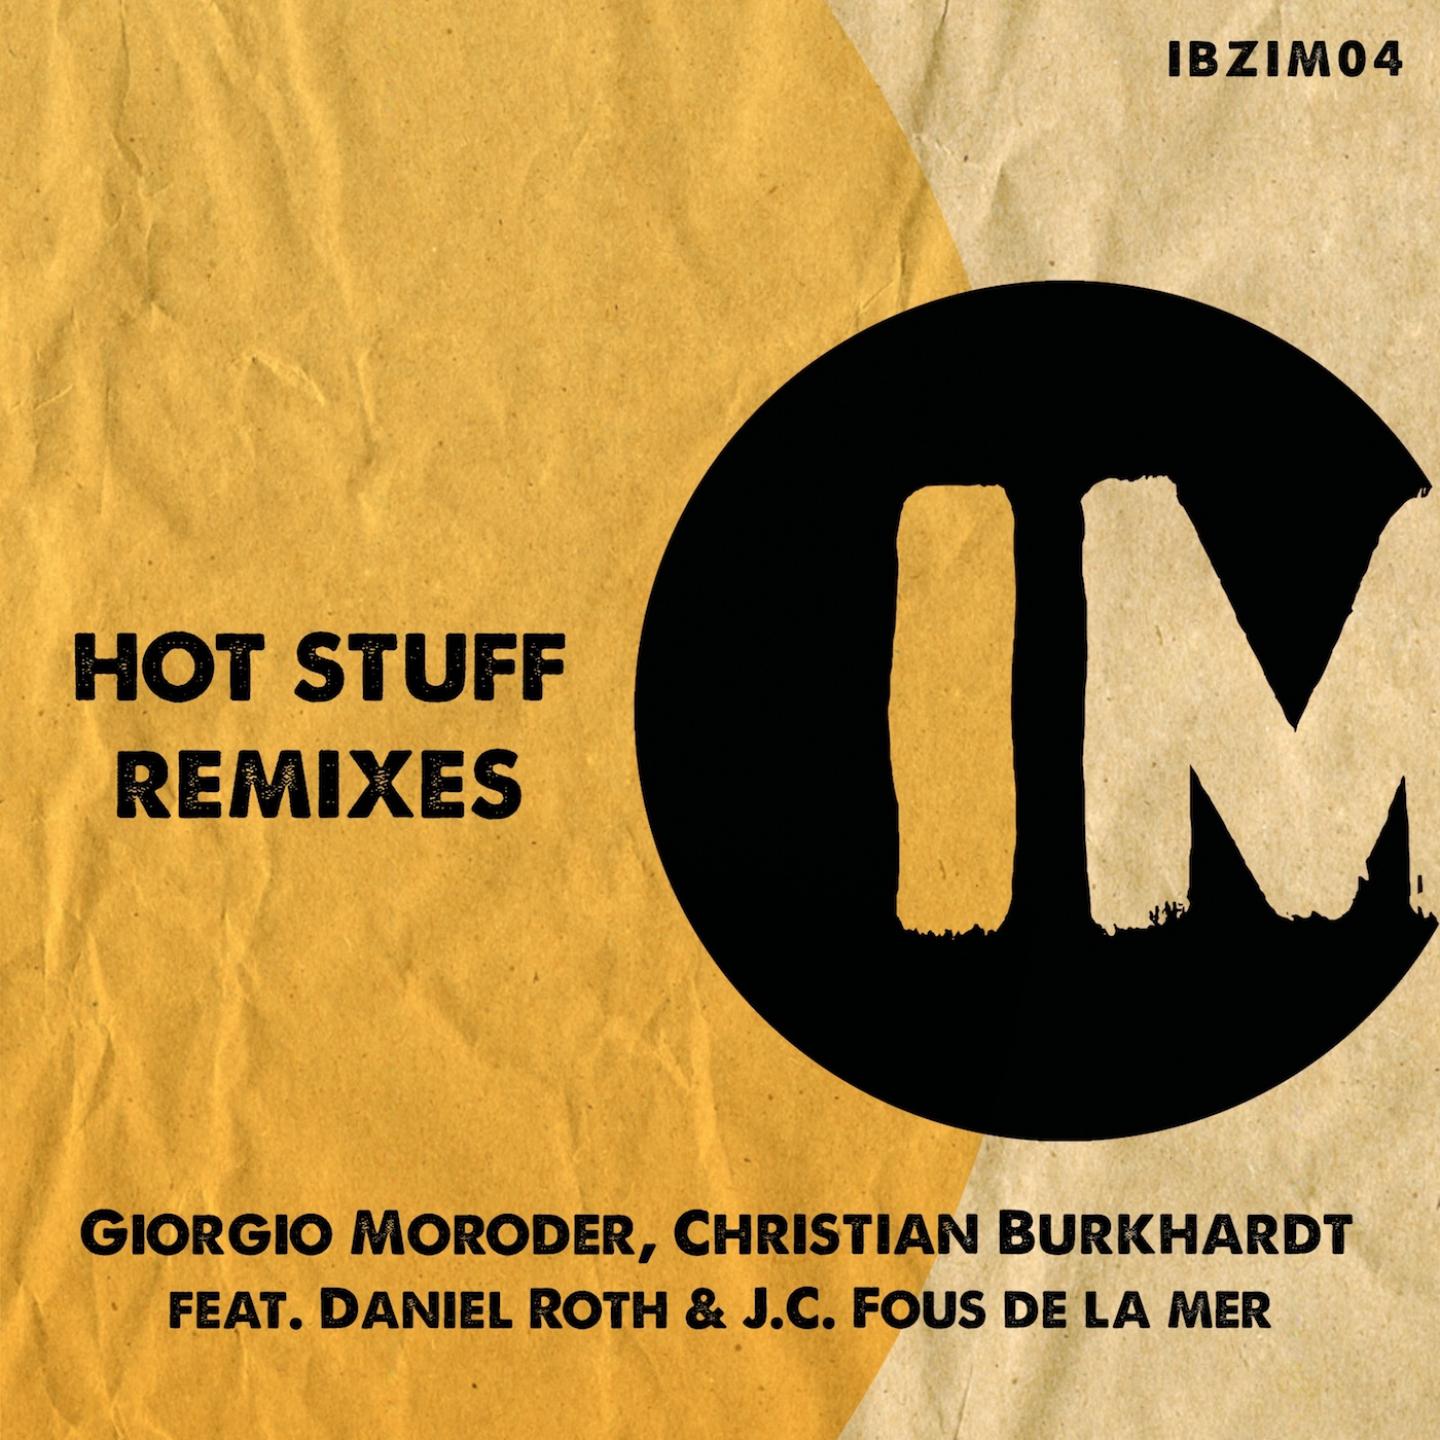 Hot Stuff (Christian Burkhardt & Daniel Roth)